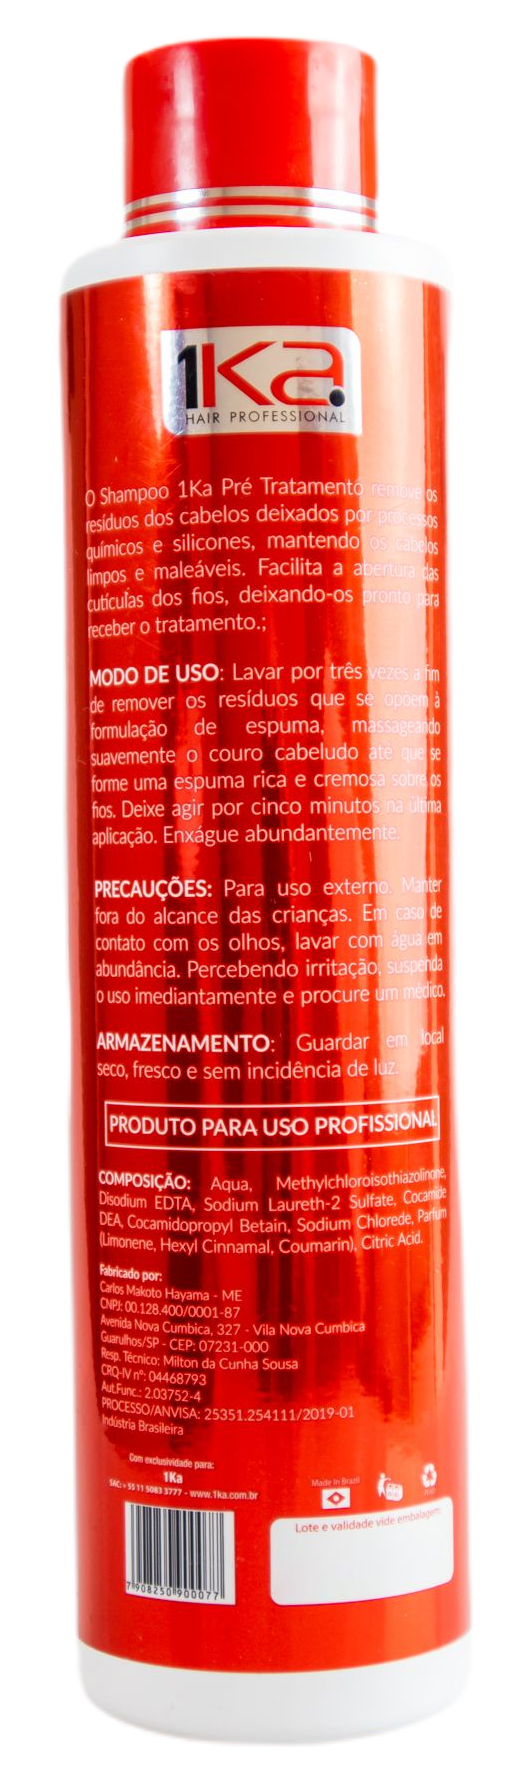 1Ka Brazilian Keratin Treatment Pre-Treatment Hair - Shampoo 1000ml - 1Ka